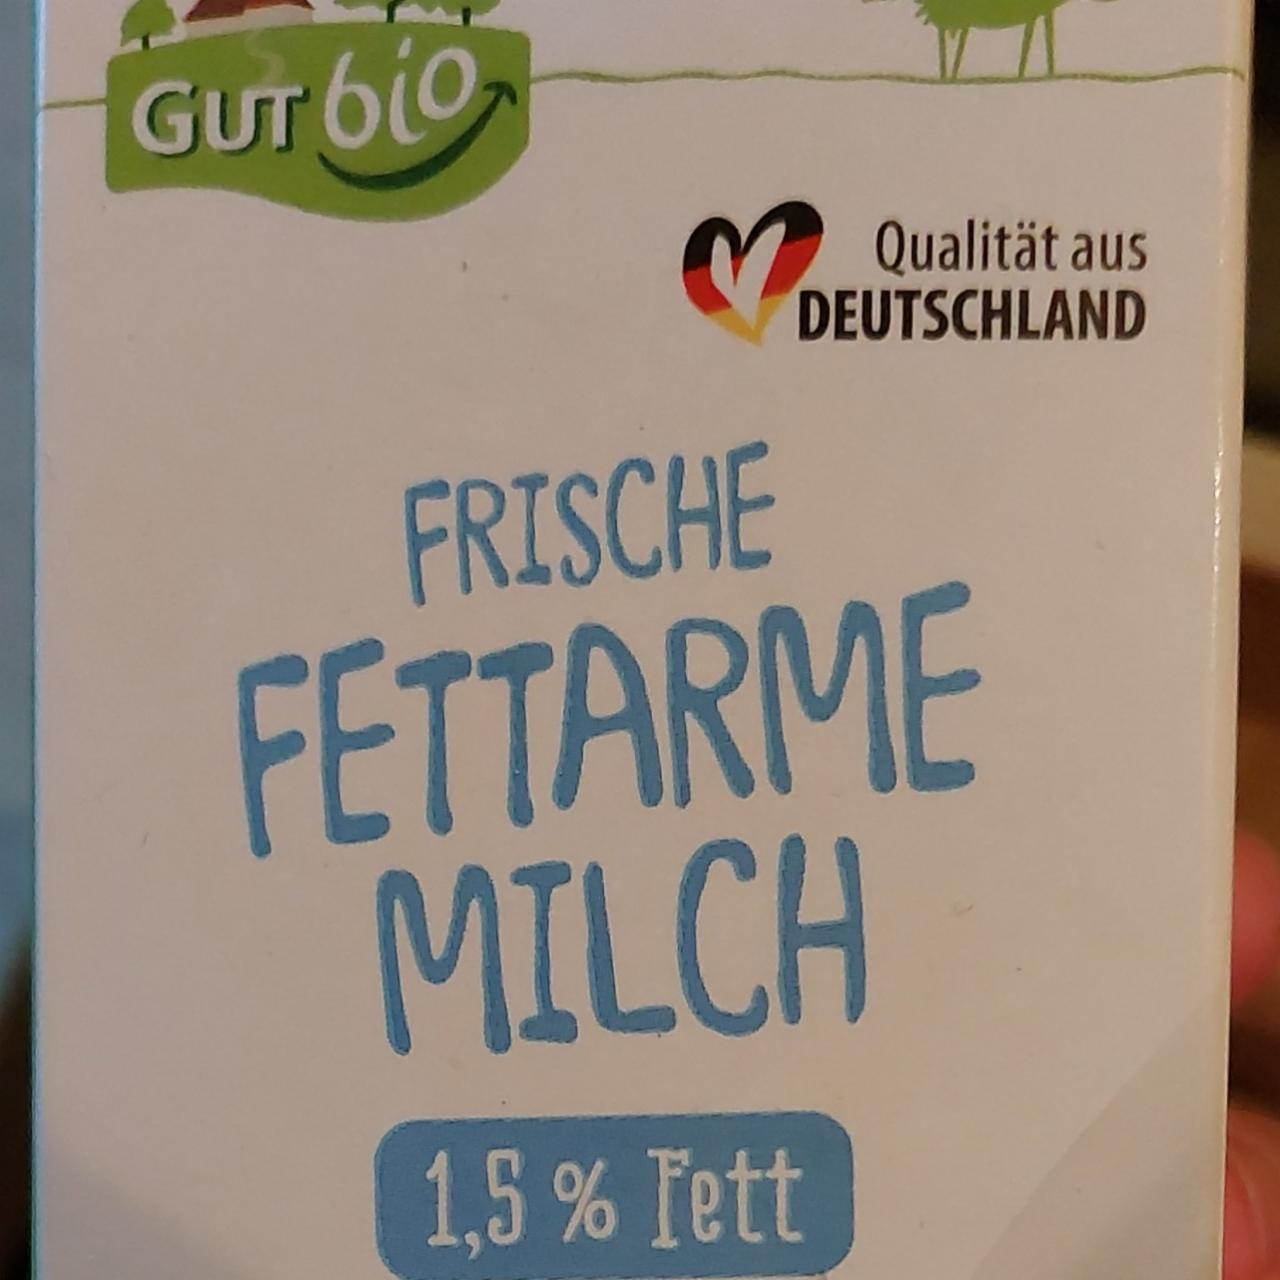 Фото - Молоко 1.5% Frische Fettarme Milch GutBio